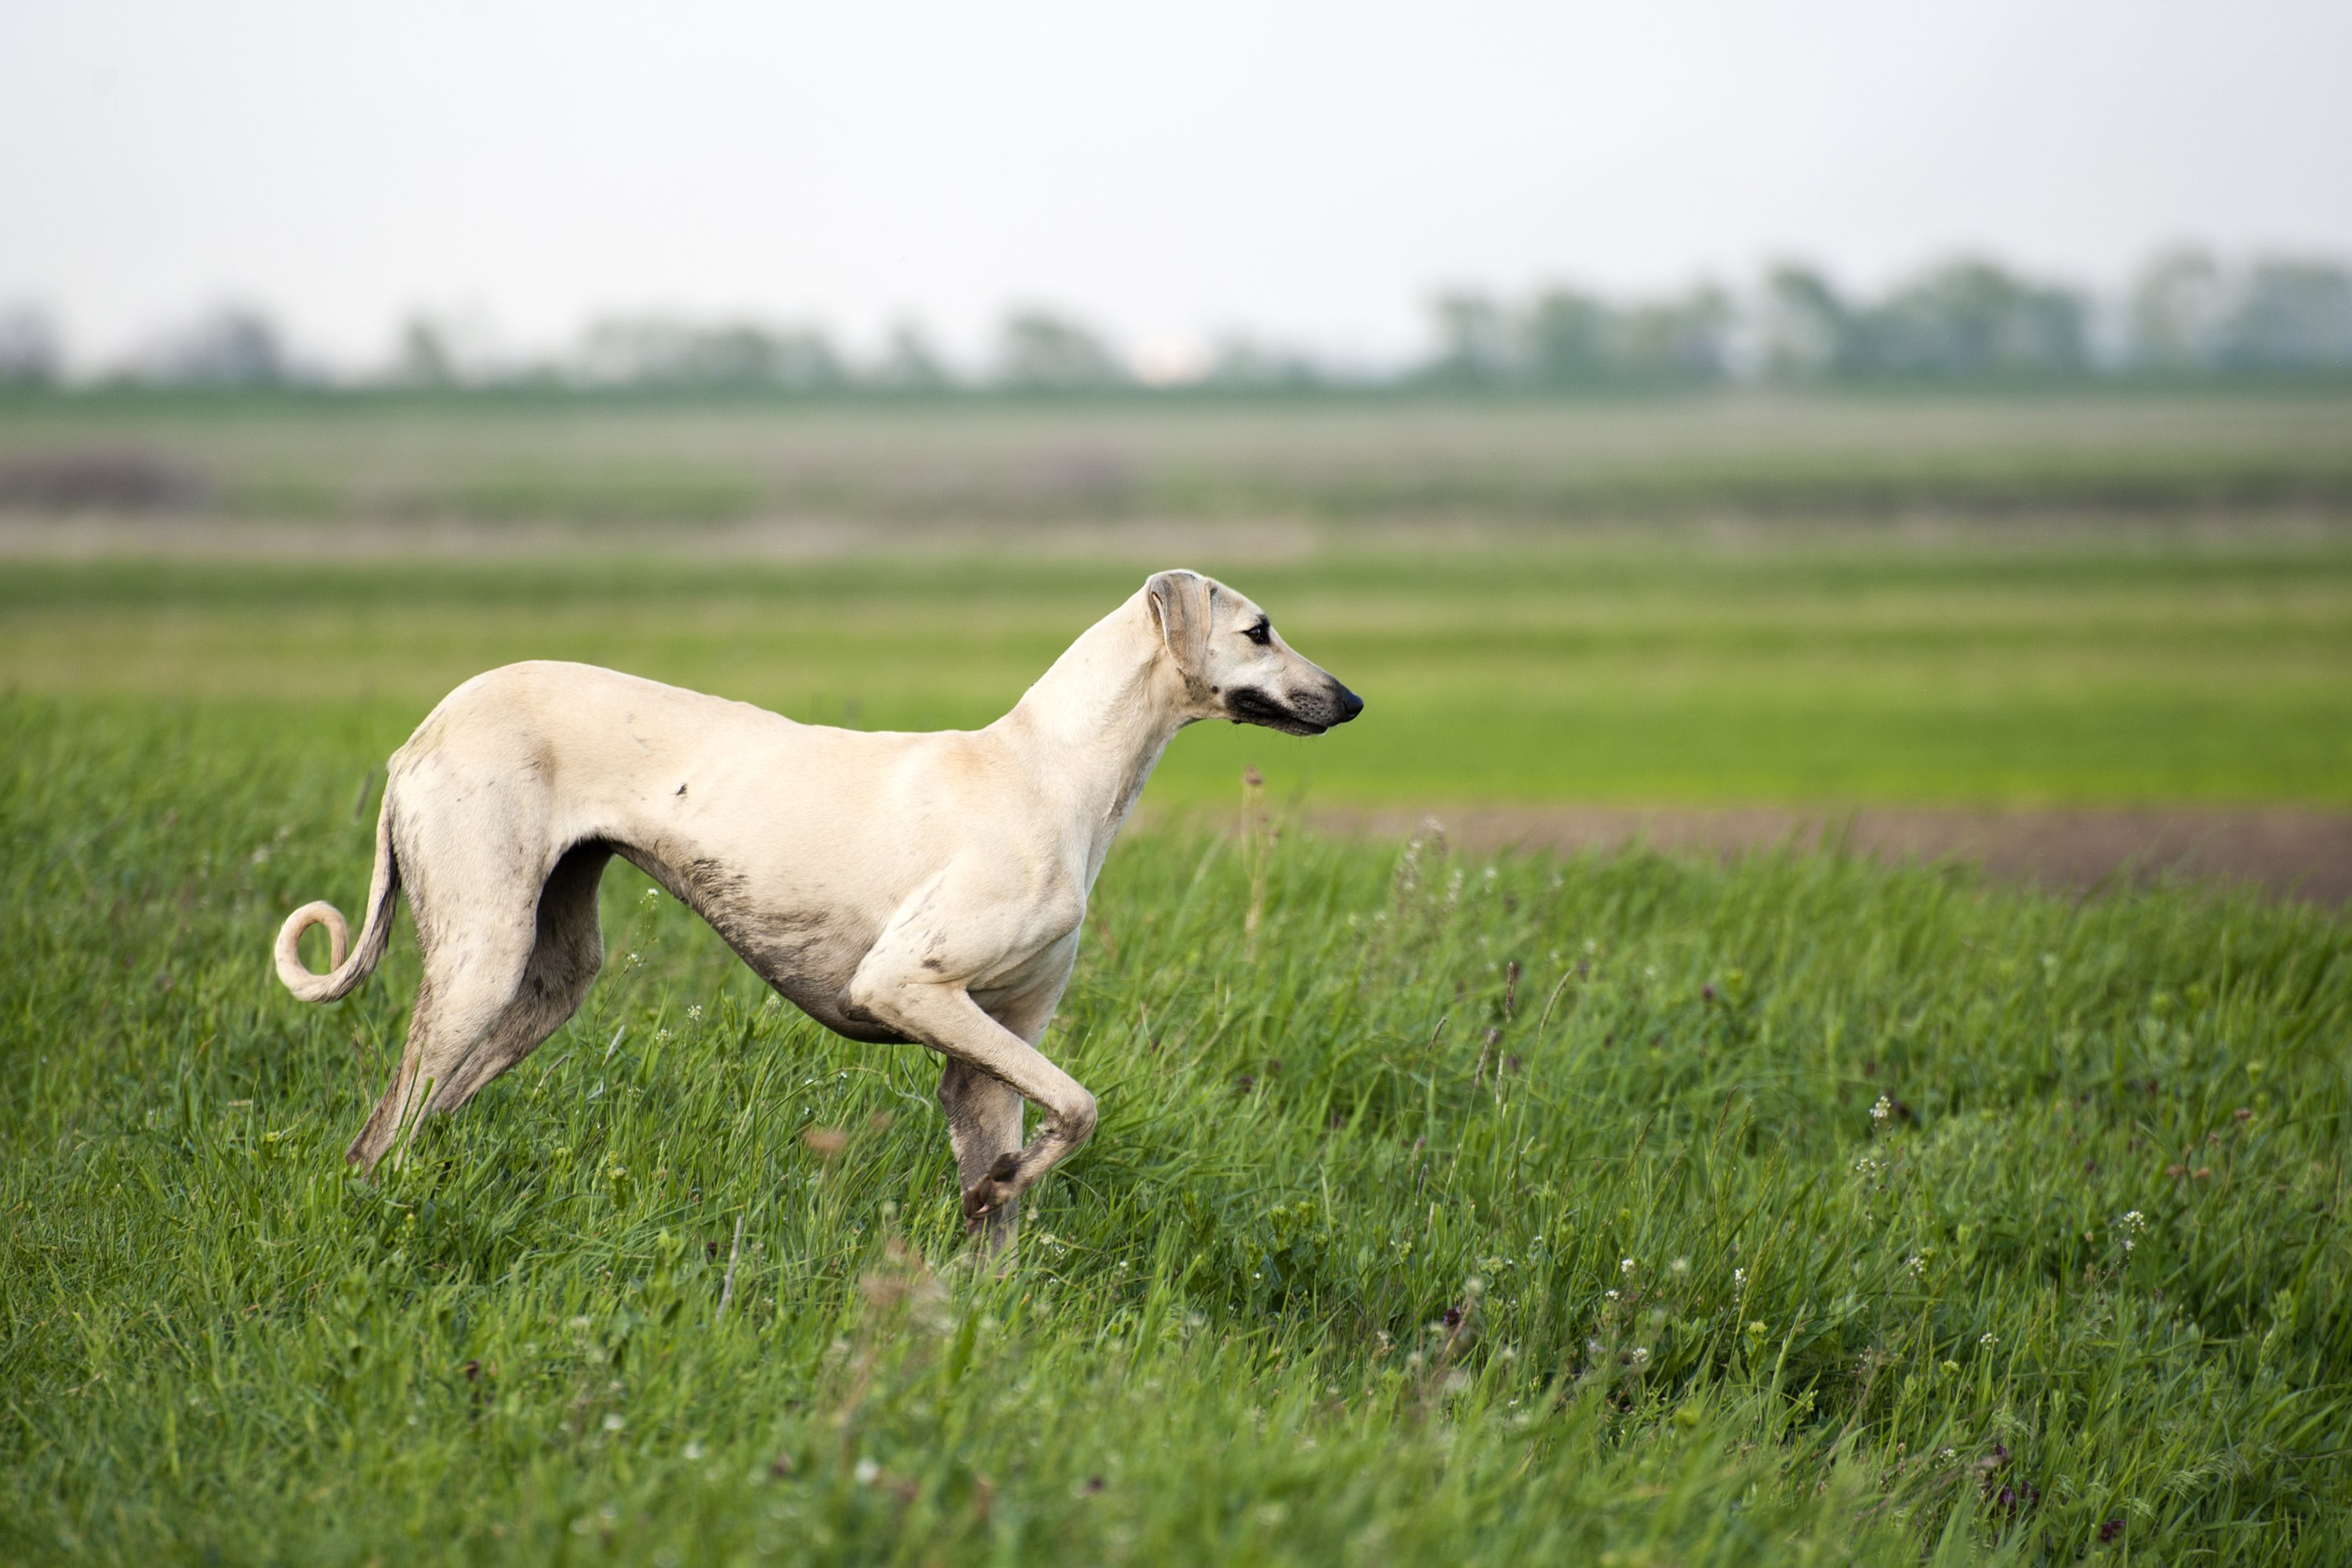 tan sloughi dog walking through an open grassy field